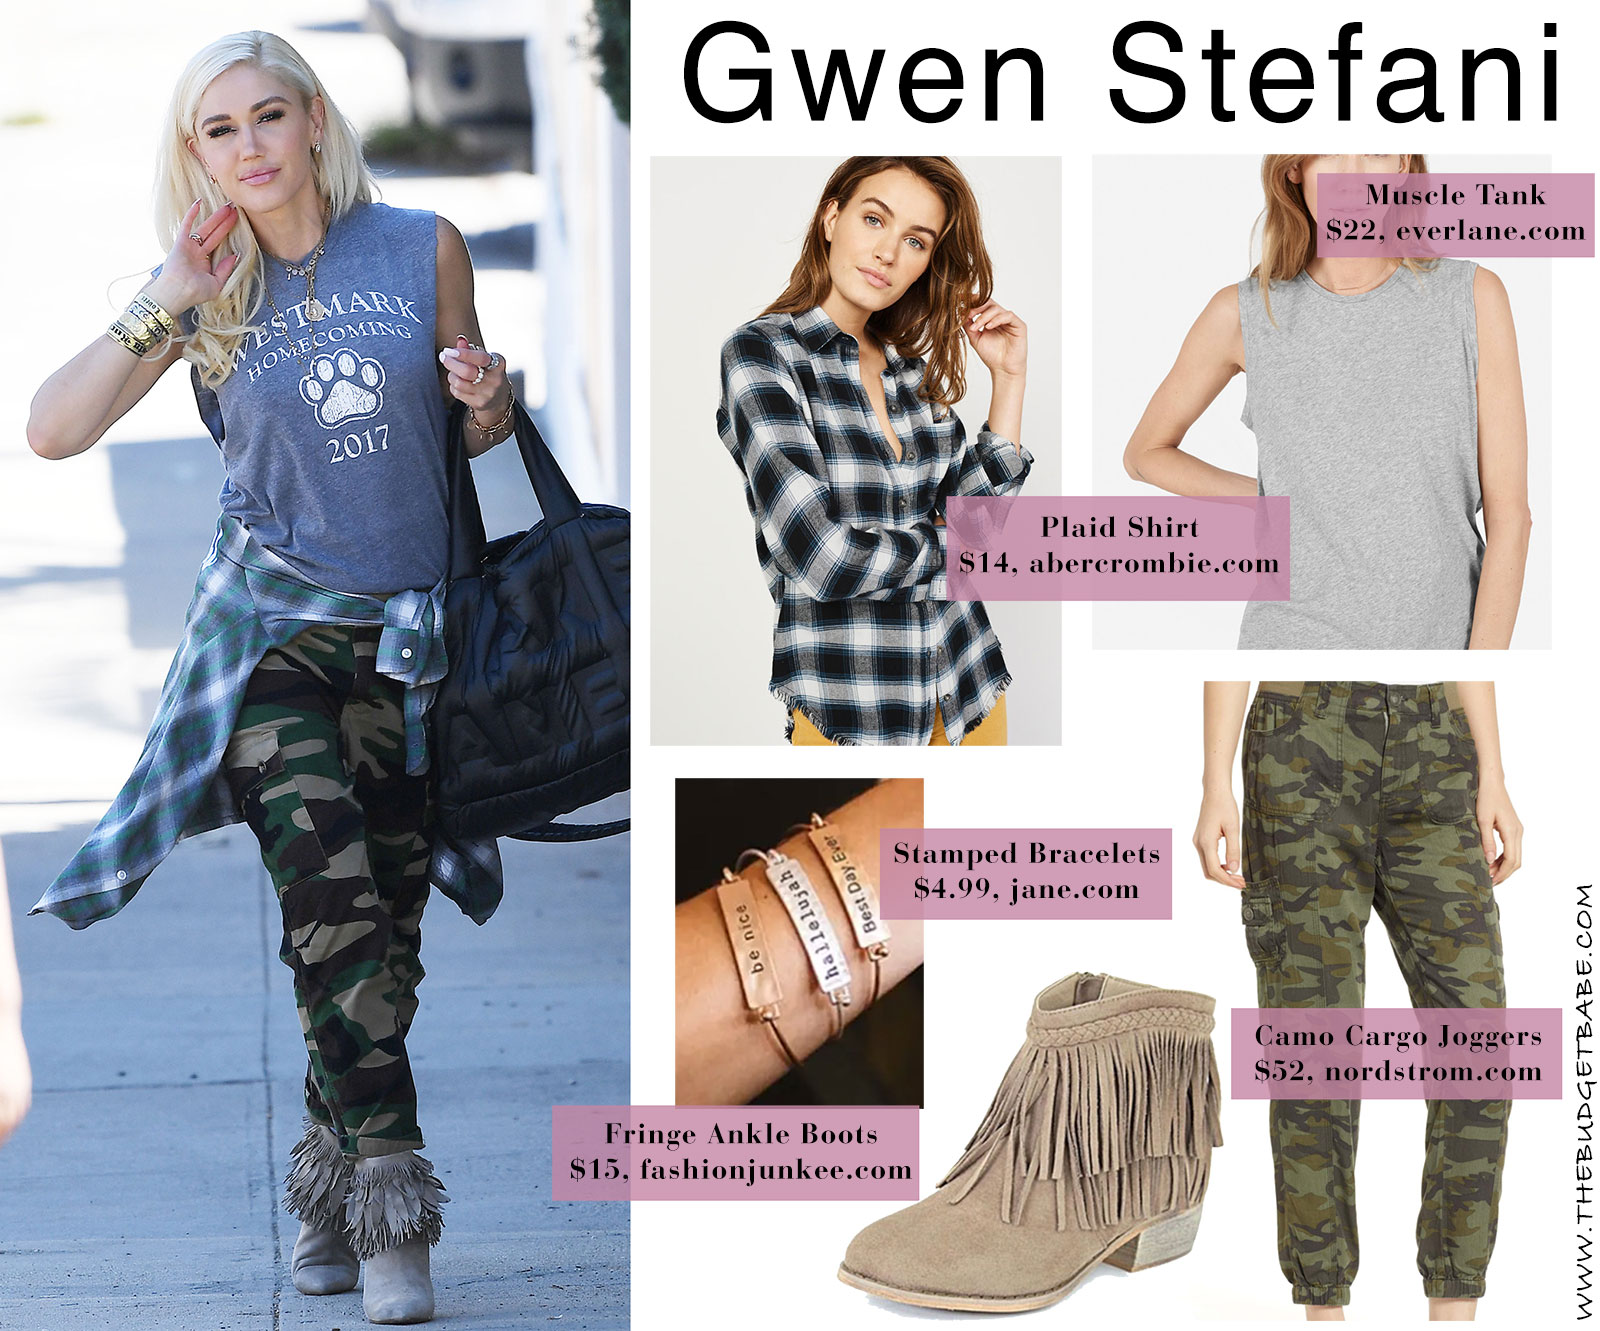 Gwen Stefani camo cargo pants look for less